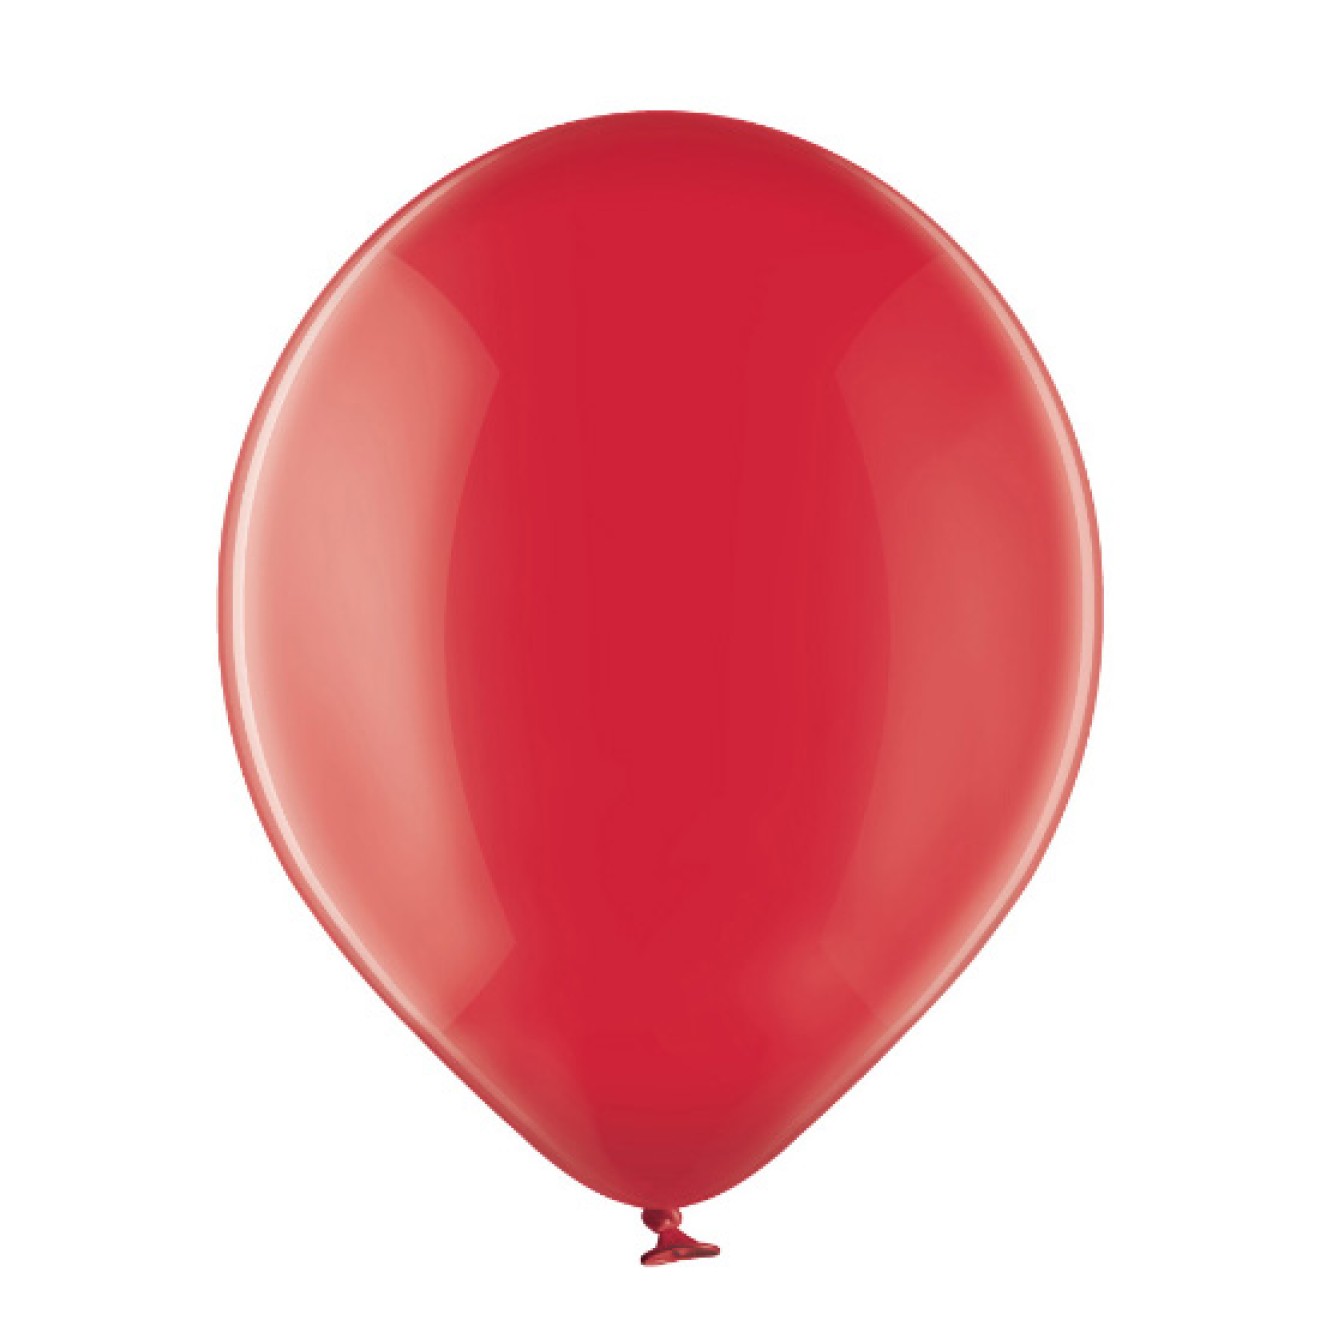 Luftballons Rot - Kristall (Durchsichtig)